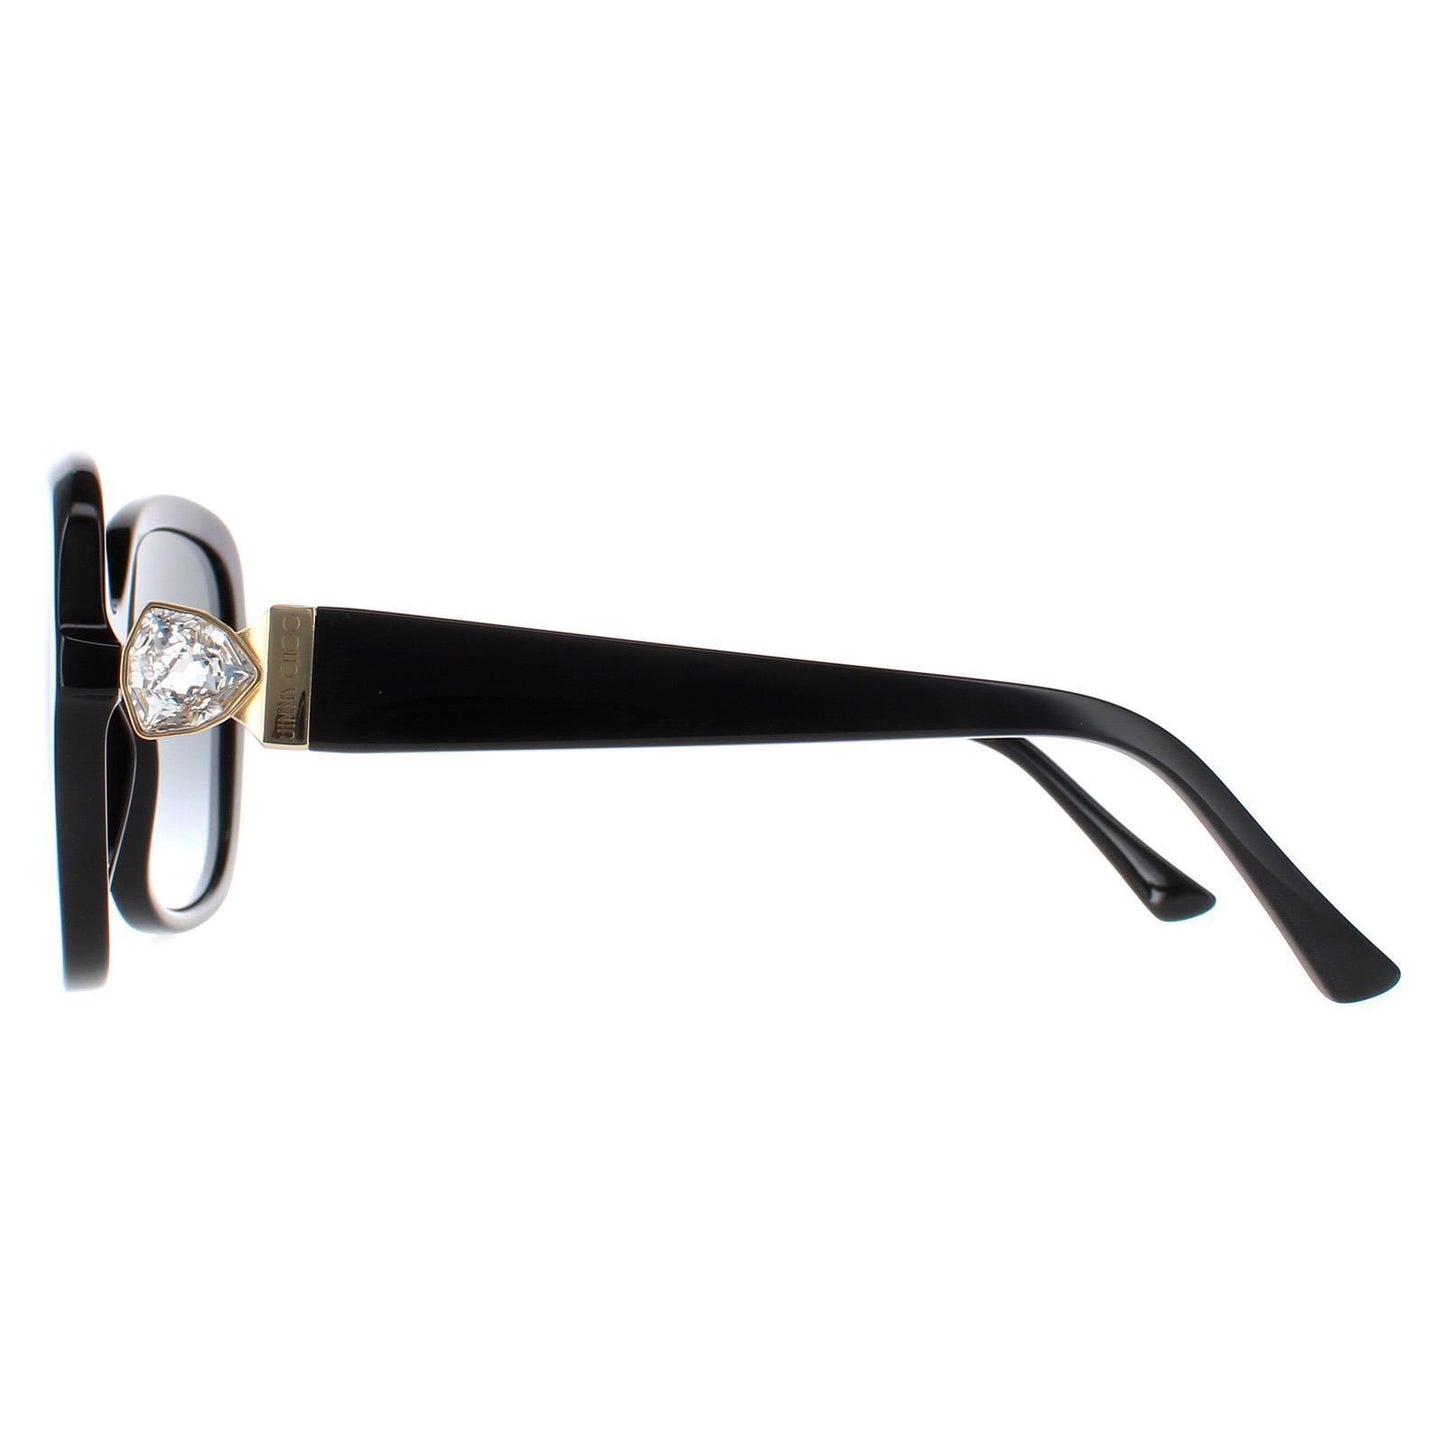 Jimmy Choo SADIE/S-0807 56mm New Sunglasses